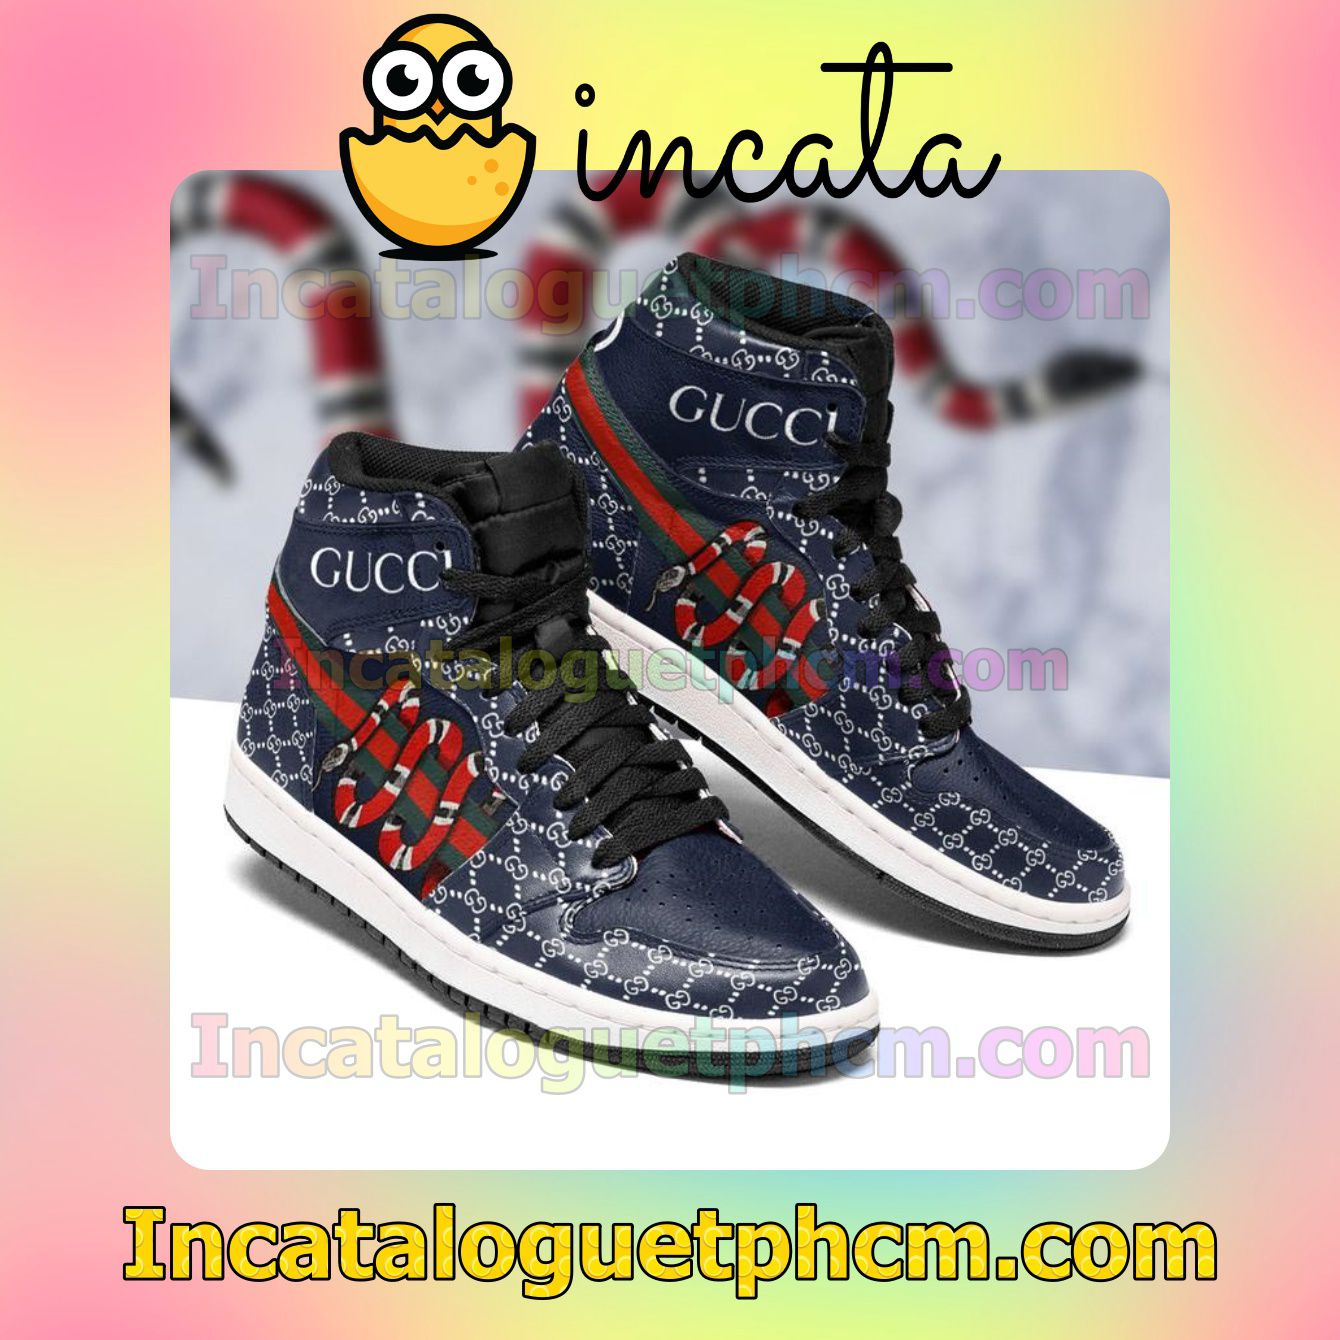 Gucci Snake Blue Air Jordan 1 Inspired Shoes